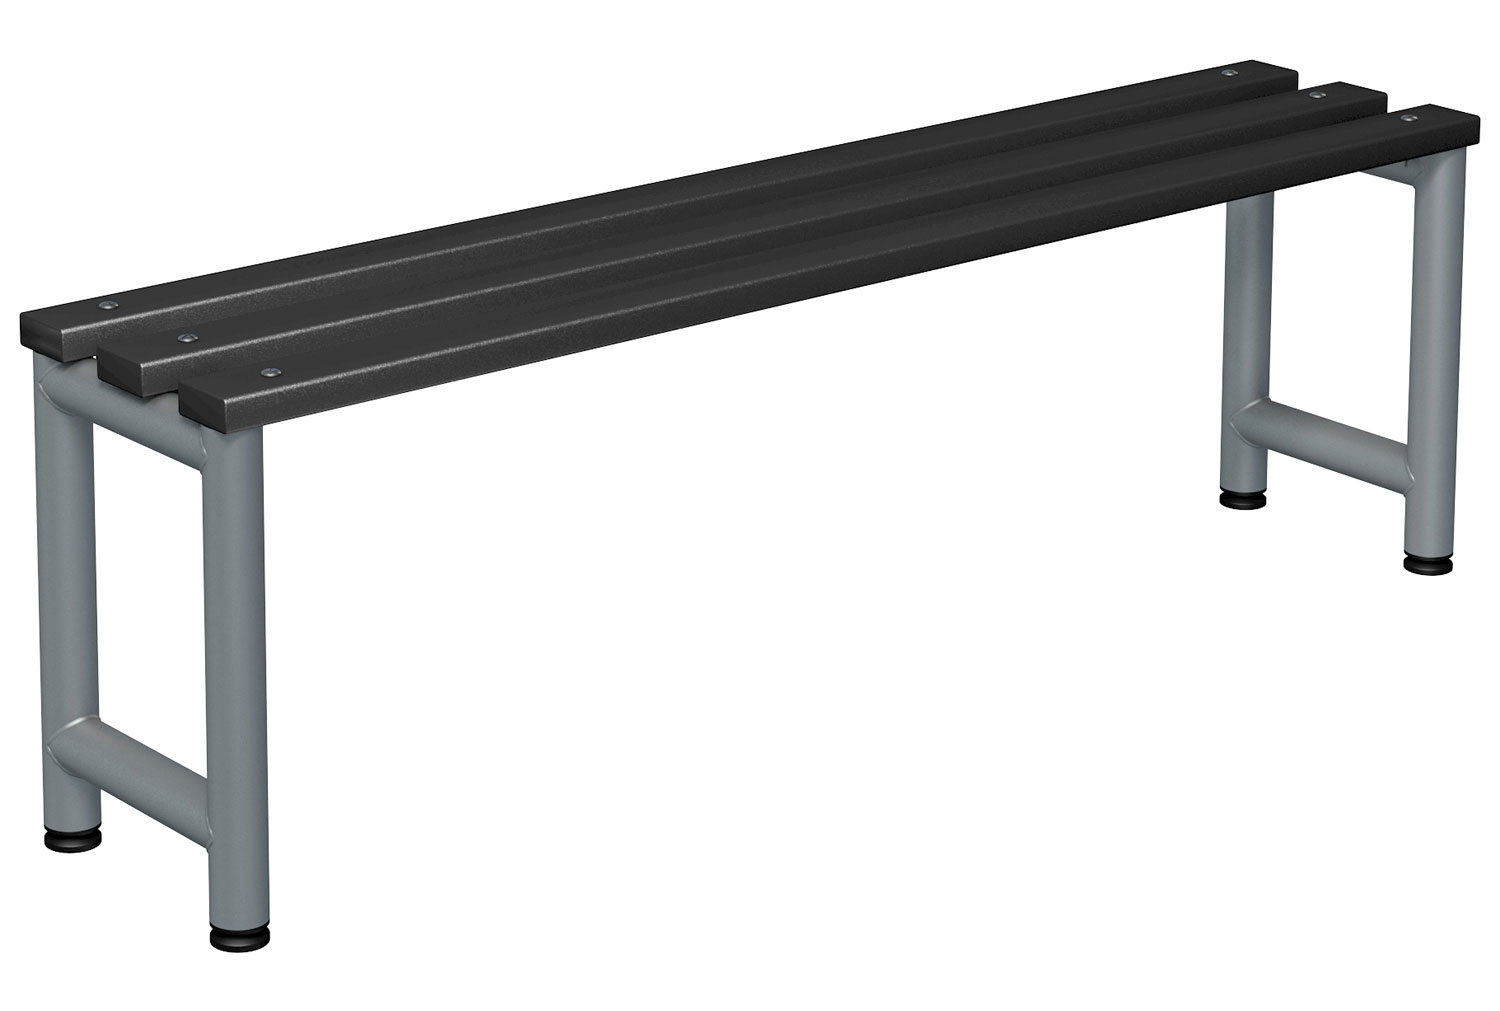 Probe Single Sided Cloakroom Bench (Black Polymer), Senior - 150wx31dx48h (cm), Black